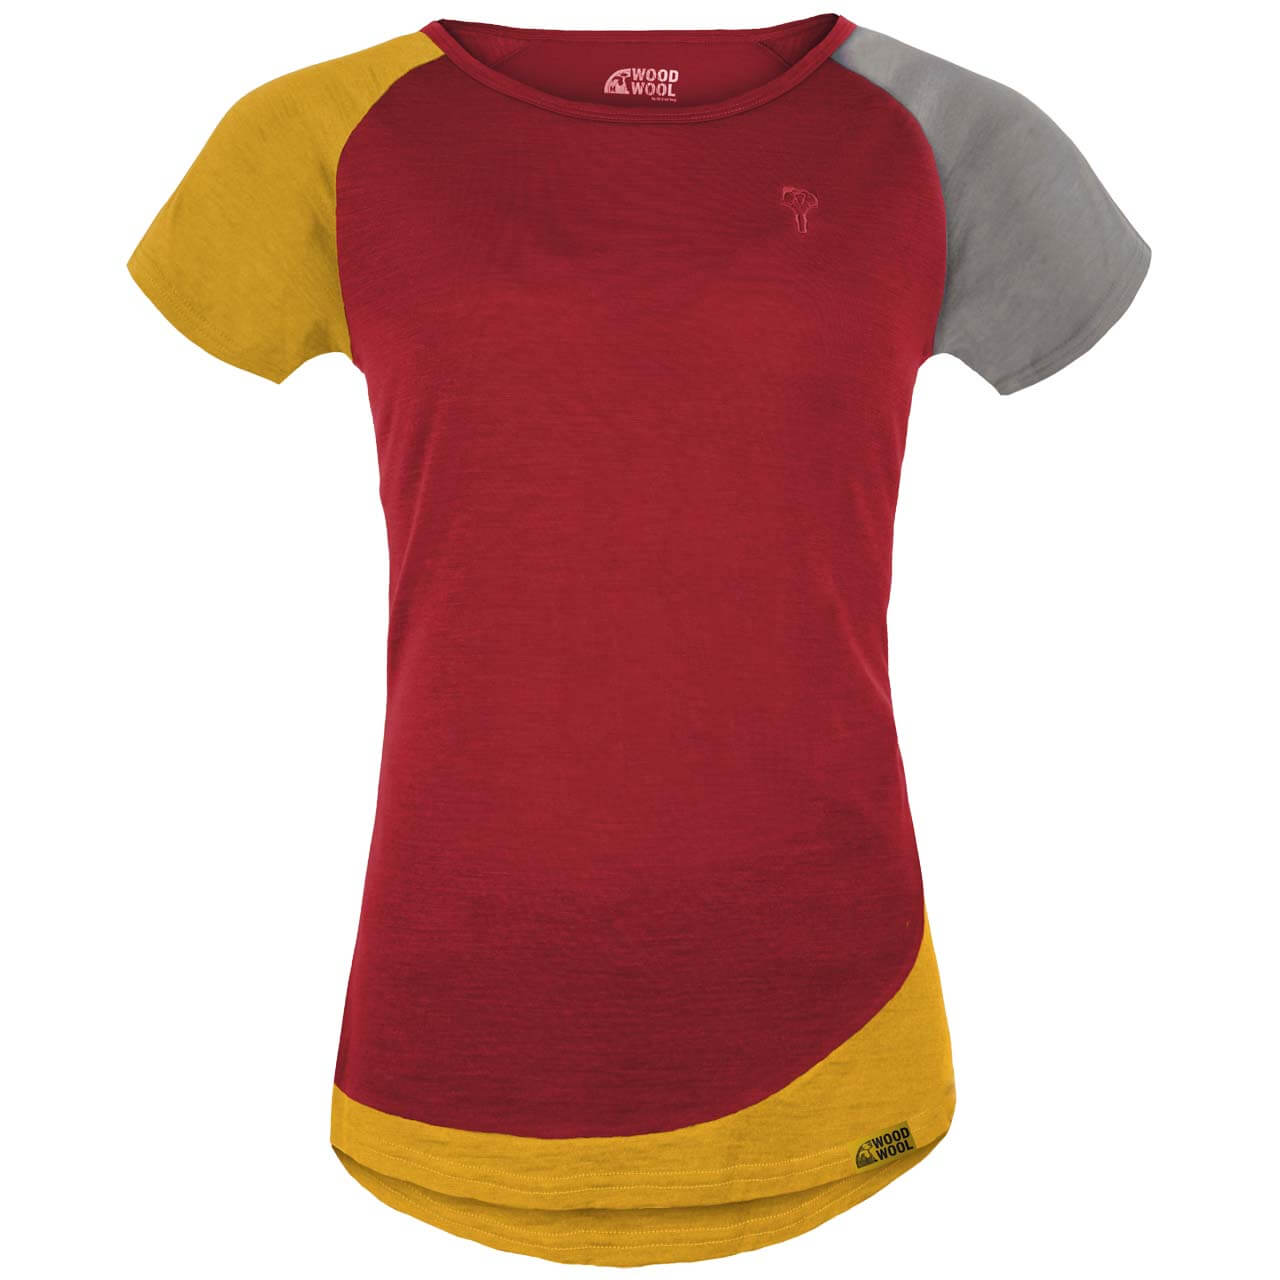 Grüezi Bag WoodWool Janeway T-Shirt - Fired Red Brick, M von Grüezi Bag}